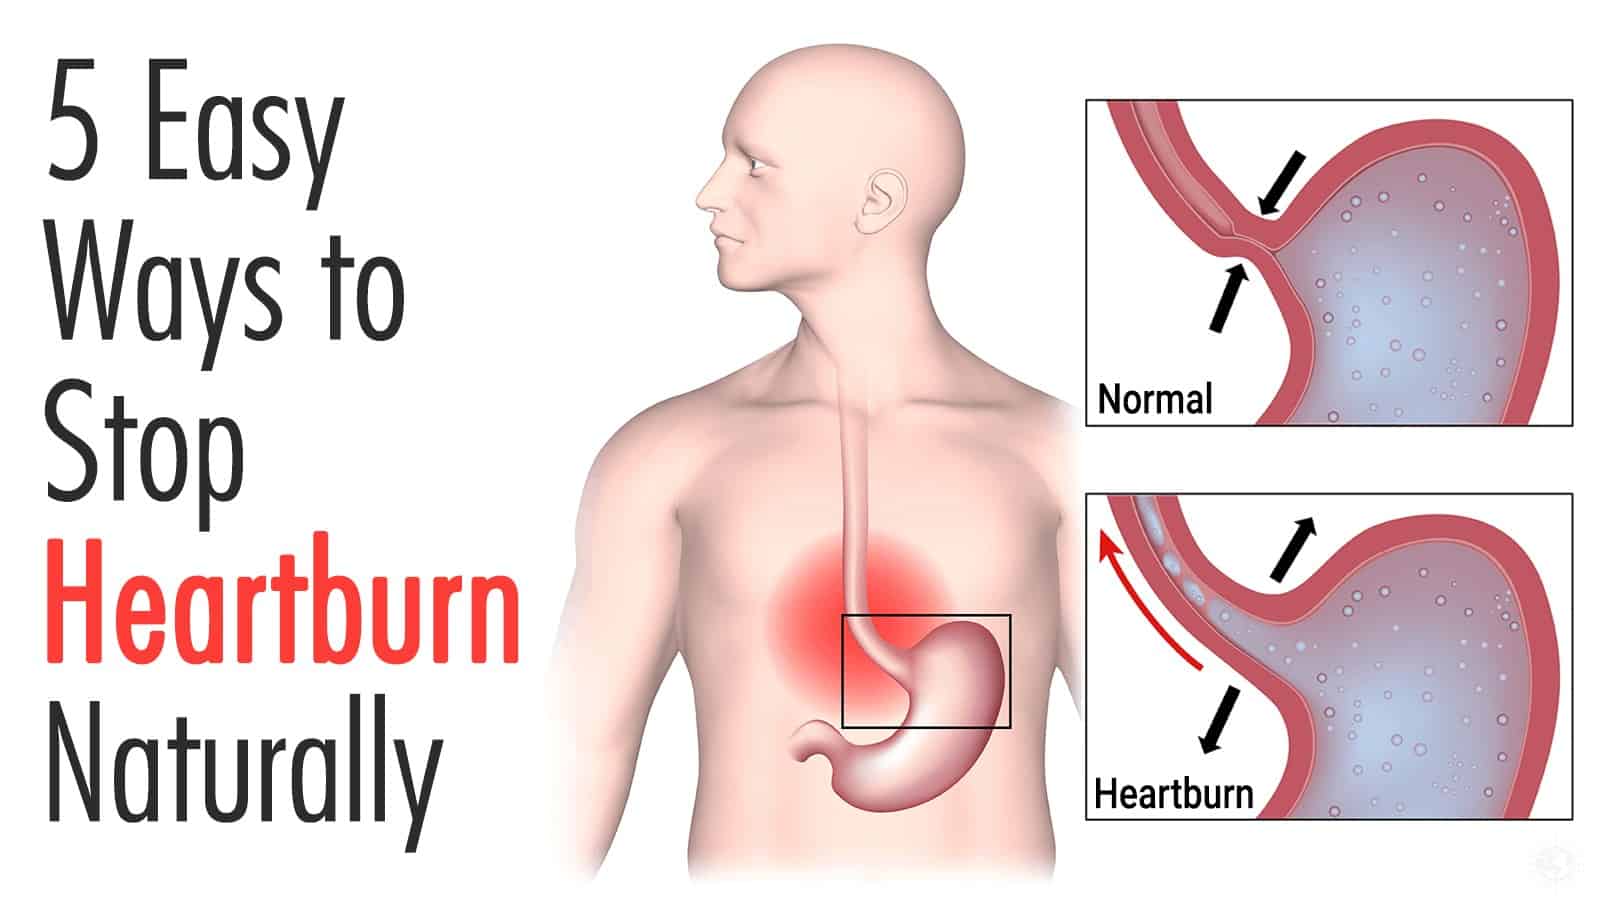 5 Easy Ways to Stop Heartburn Naturally